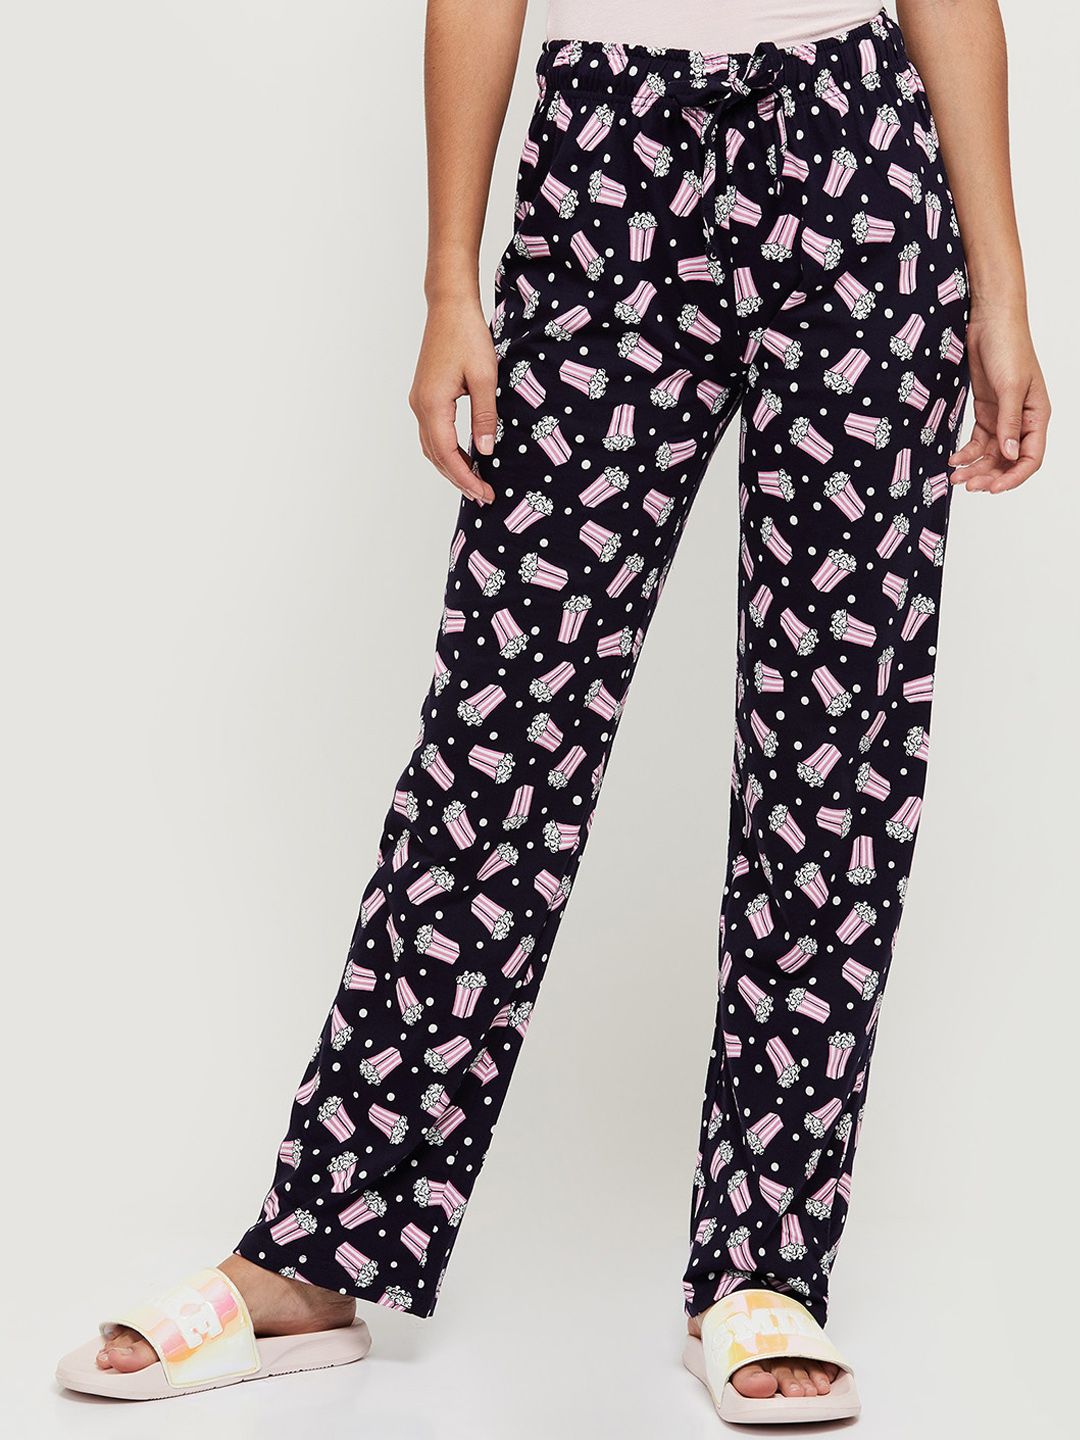 max Women Black & Pink Printed Cotton Lounge Pants Price in India